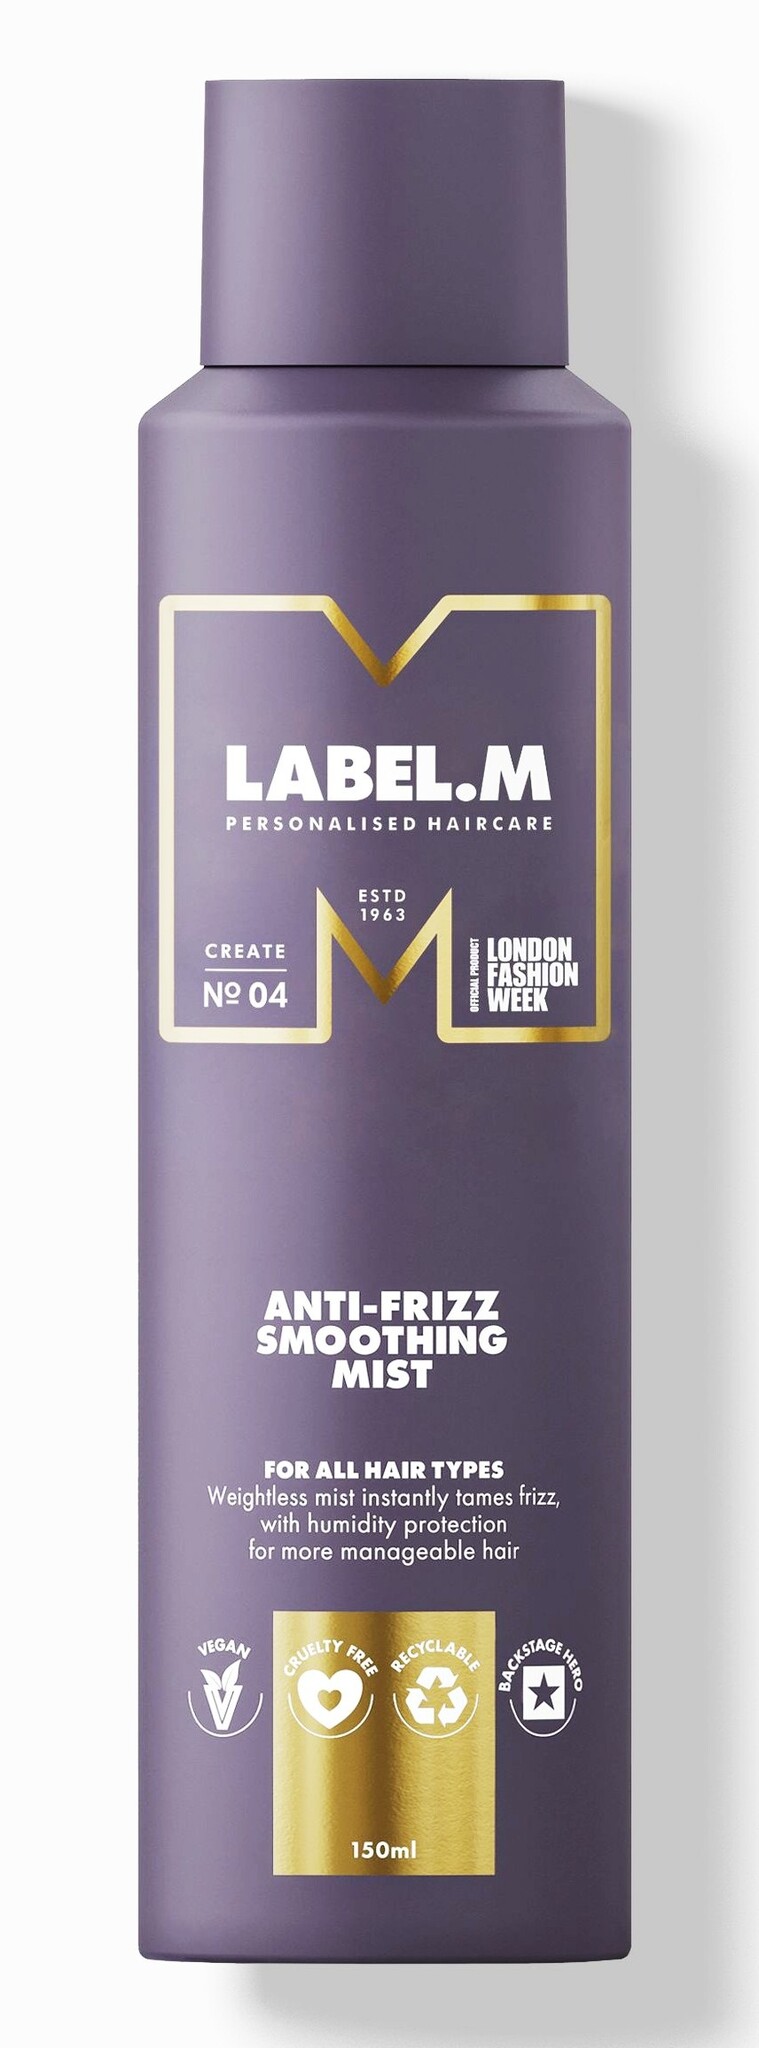 Label.m Anti-Frizz Smoothing Mist 150ml